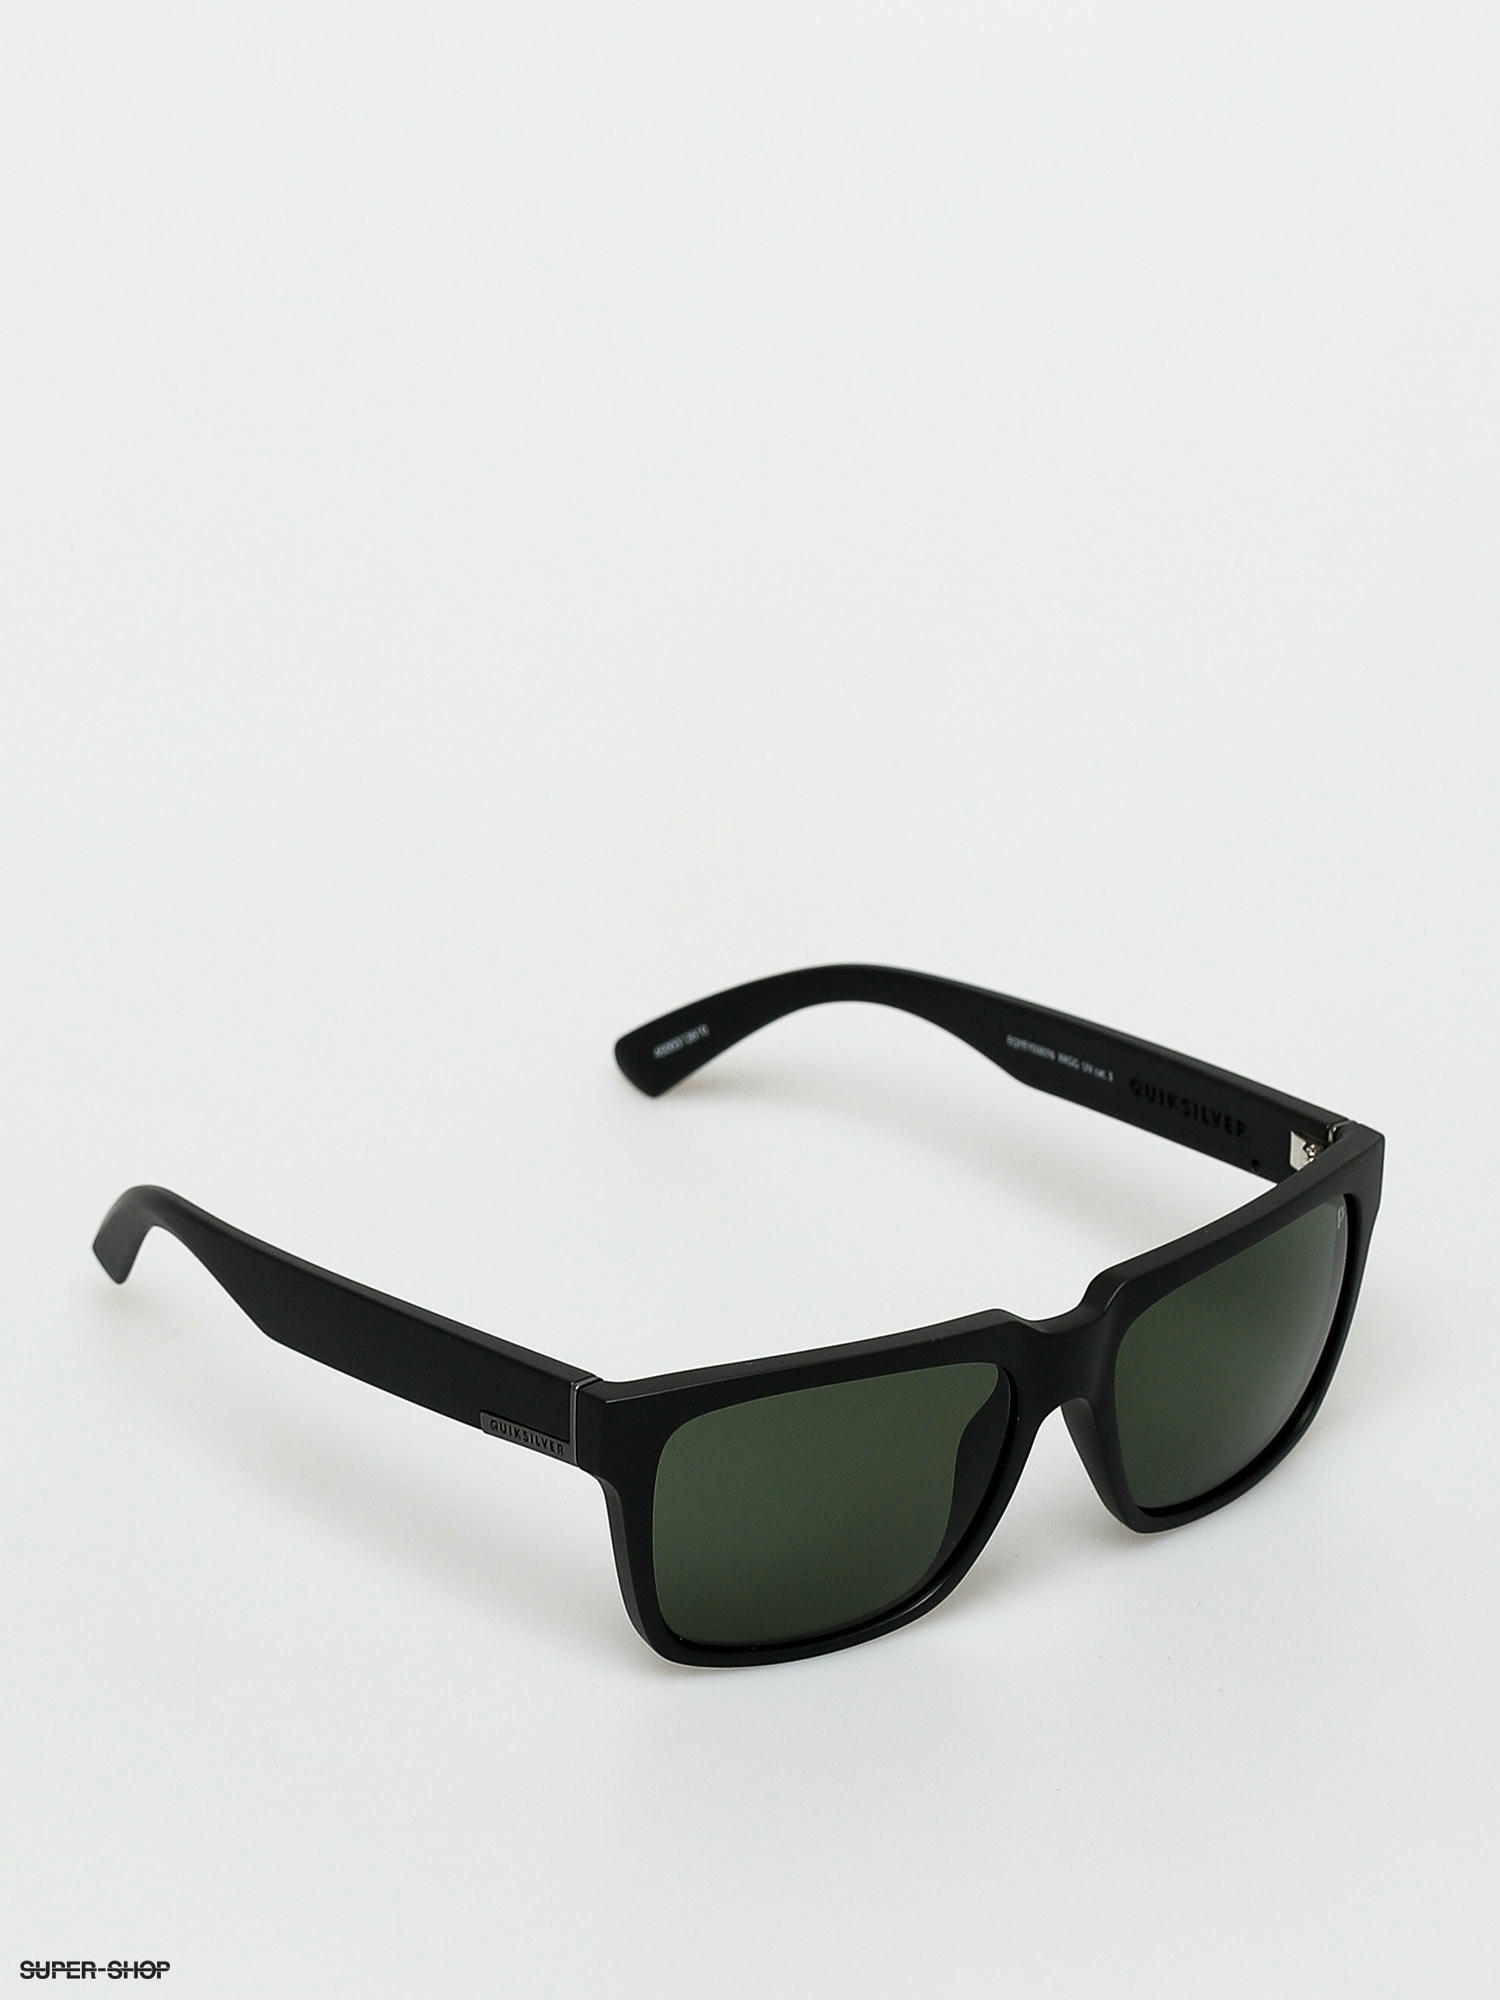 black/green p) Quiksilver Bruiser Sunglasses Polarized (matte